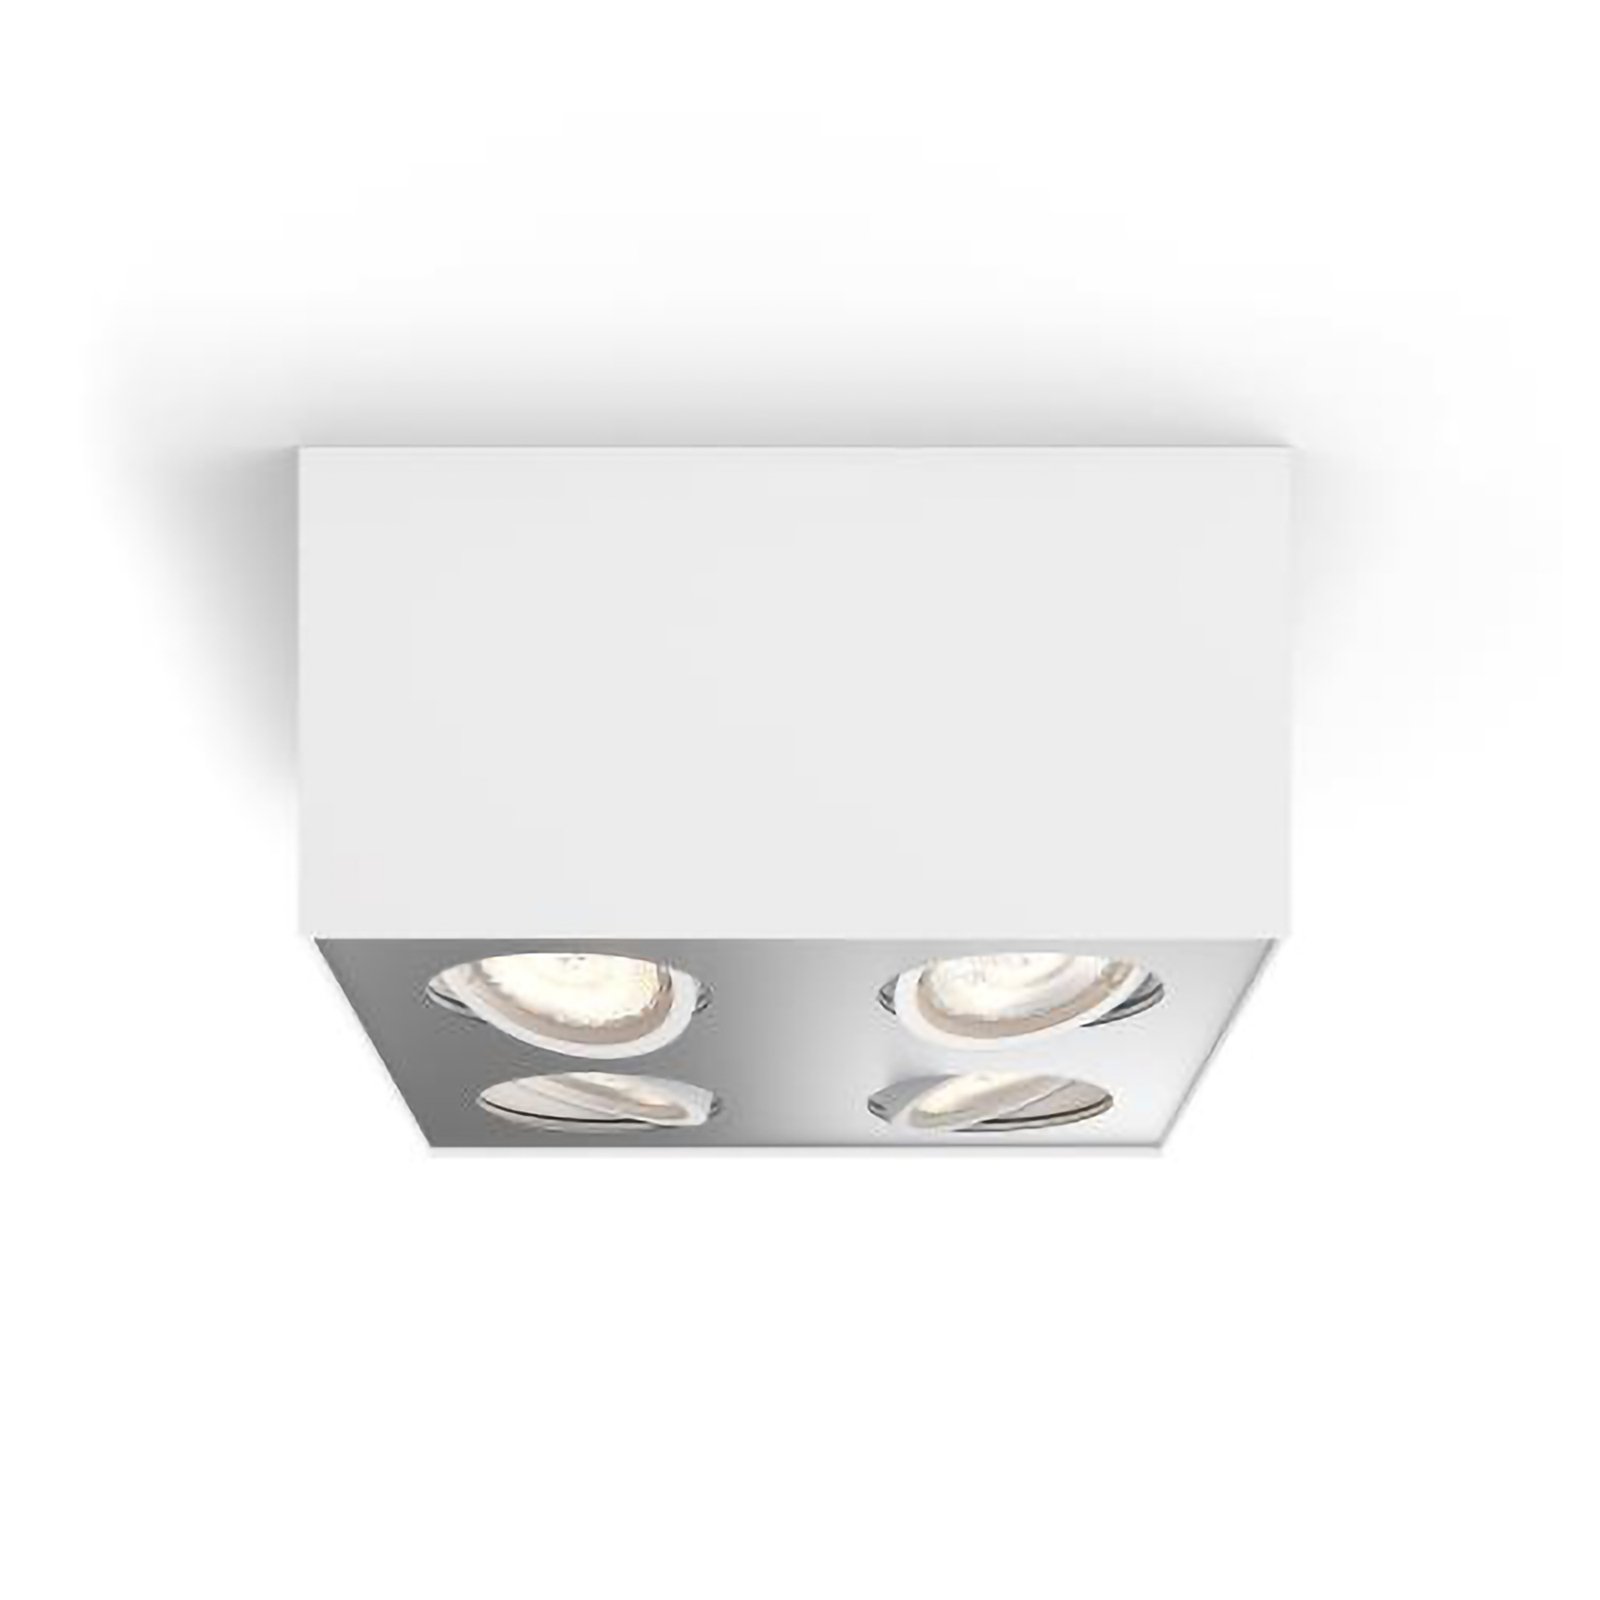 Philips myLiving Box LED-Spot vierflammig weiß